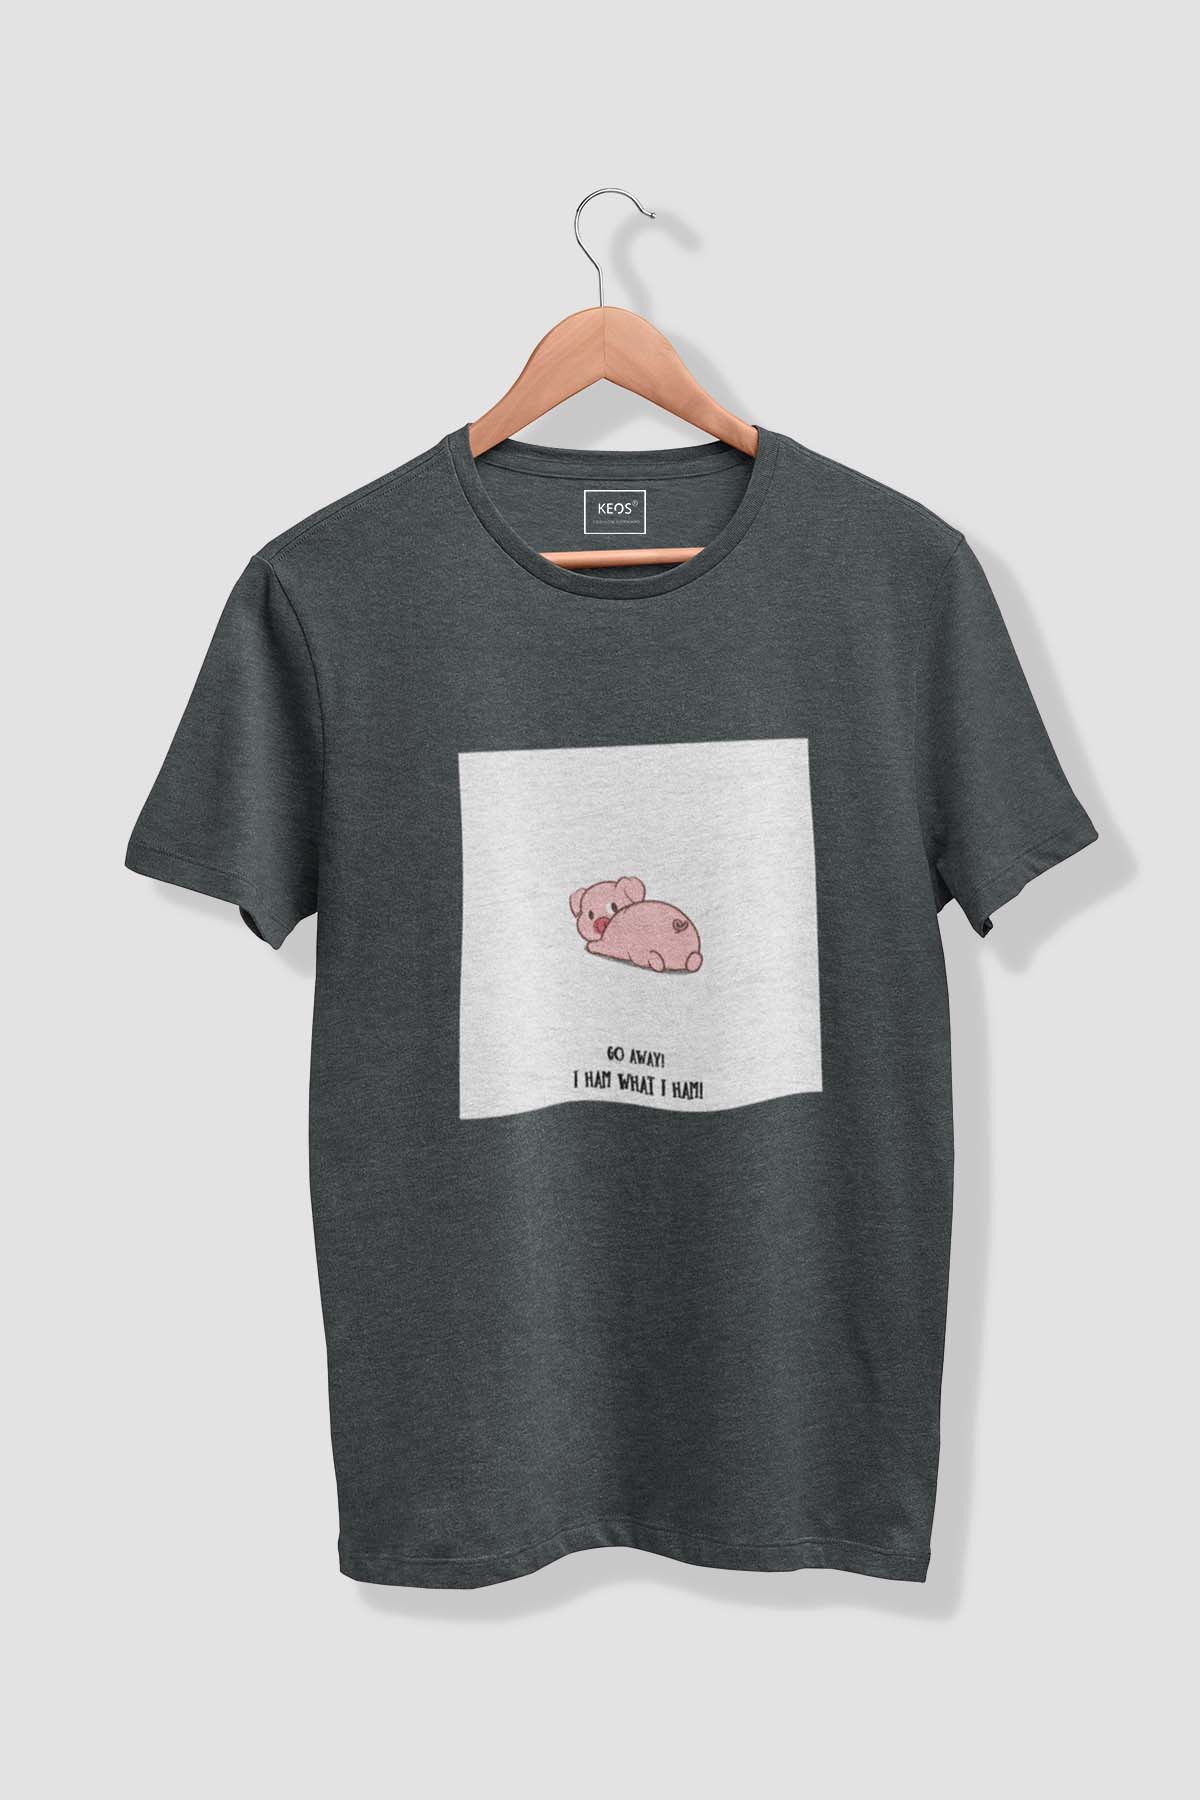 I Ham What - Melange Cotton T-shirt - keos.life